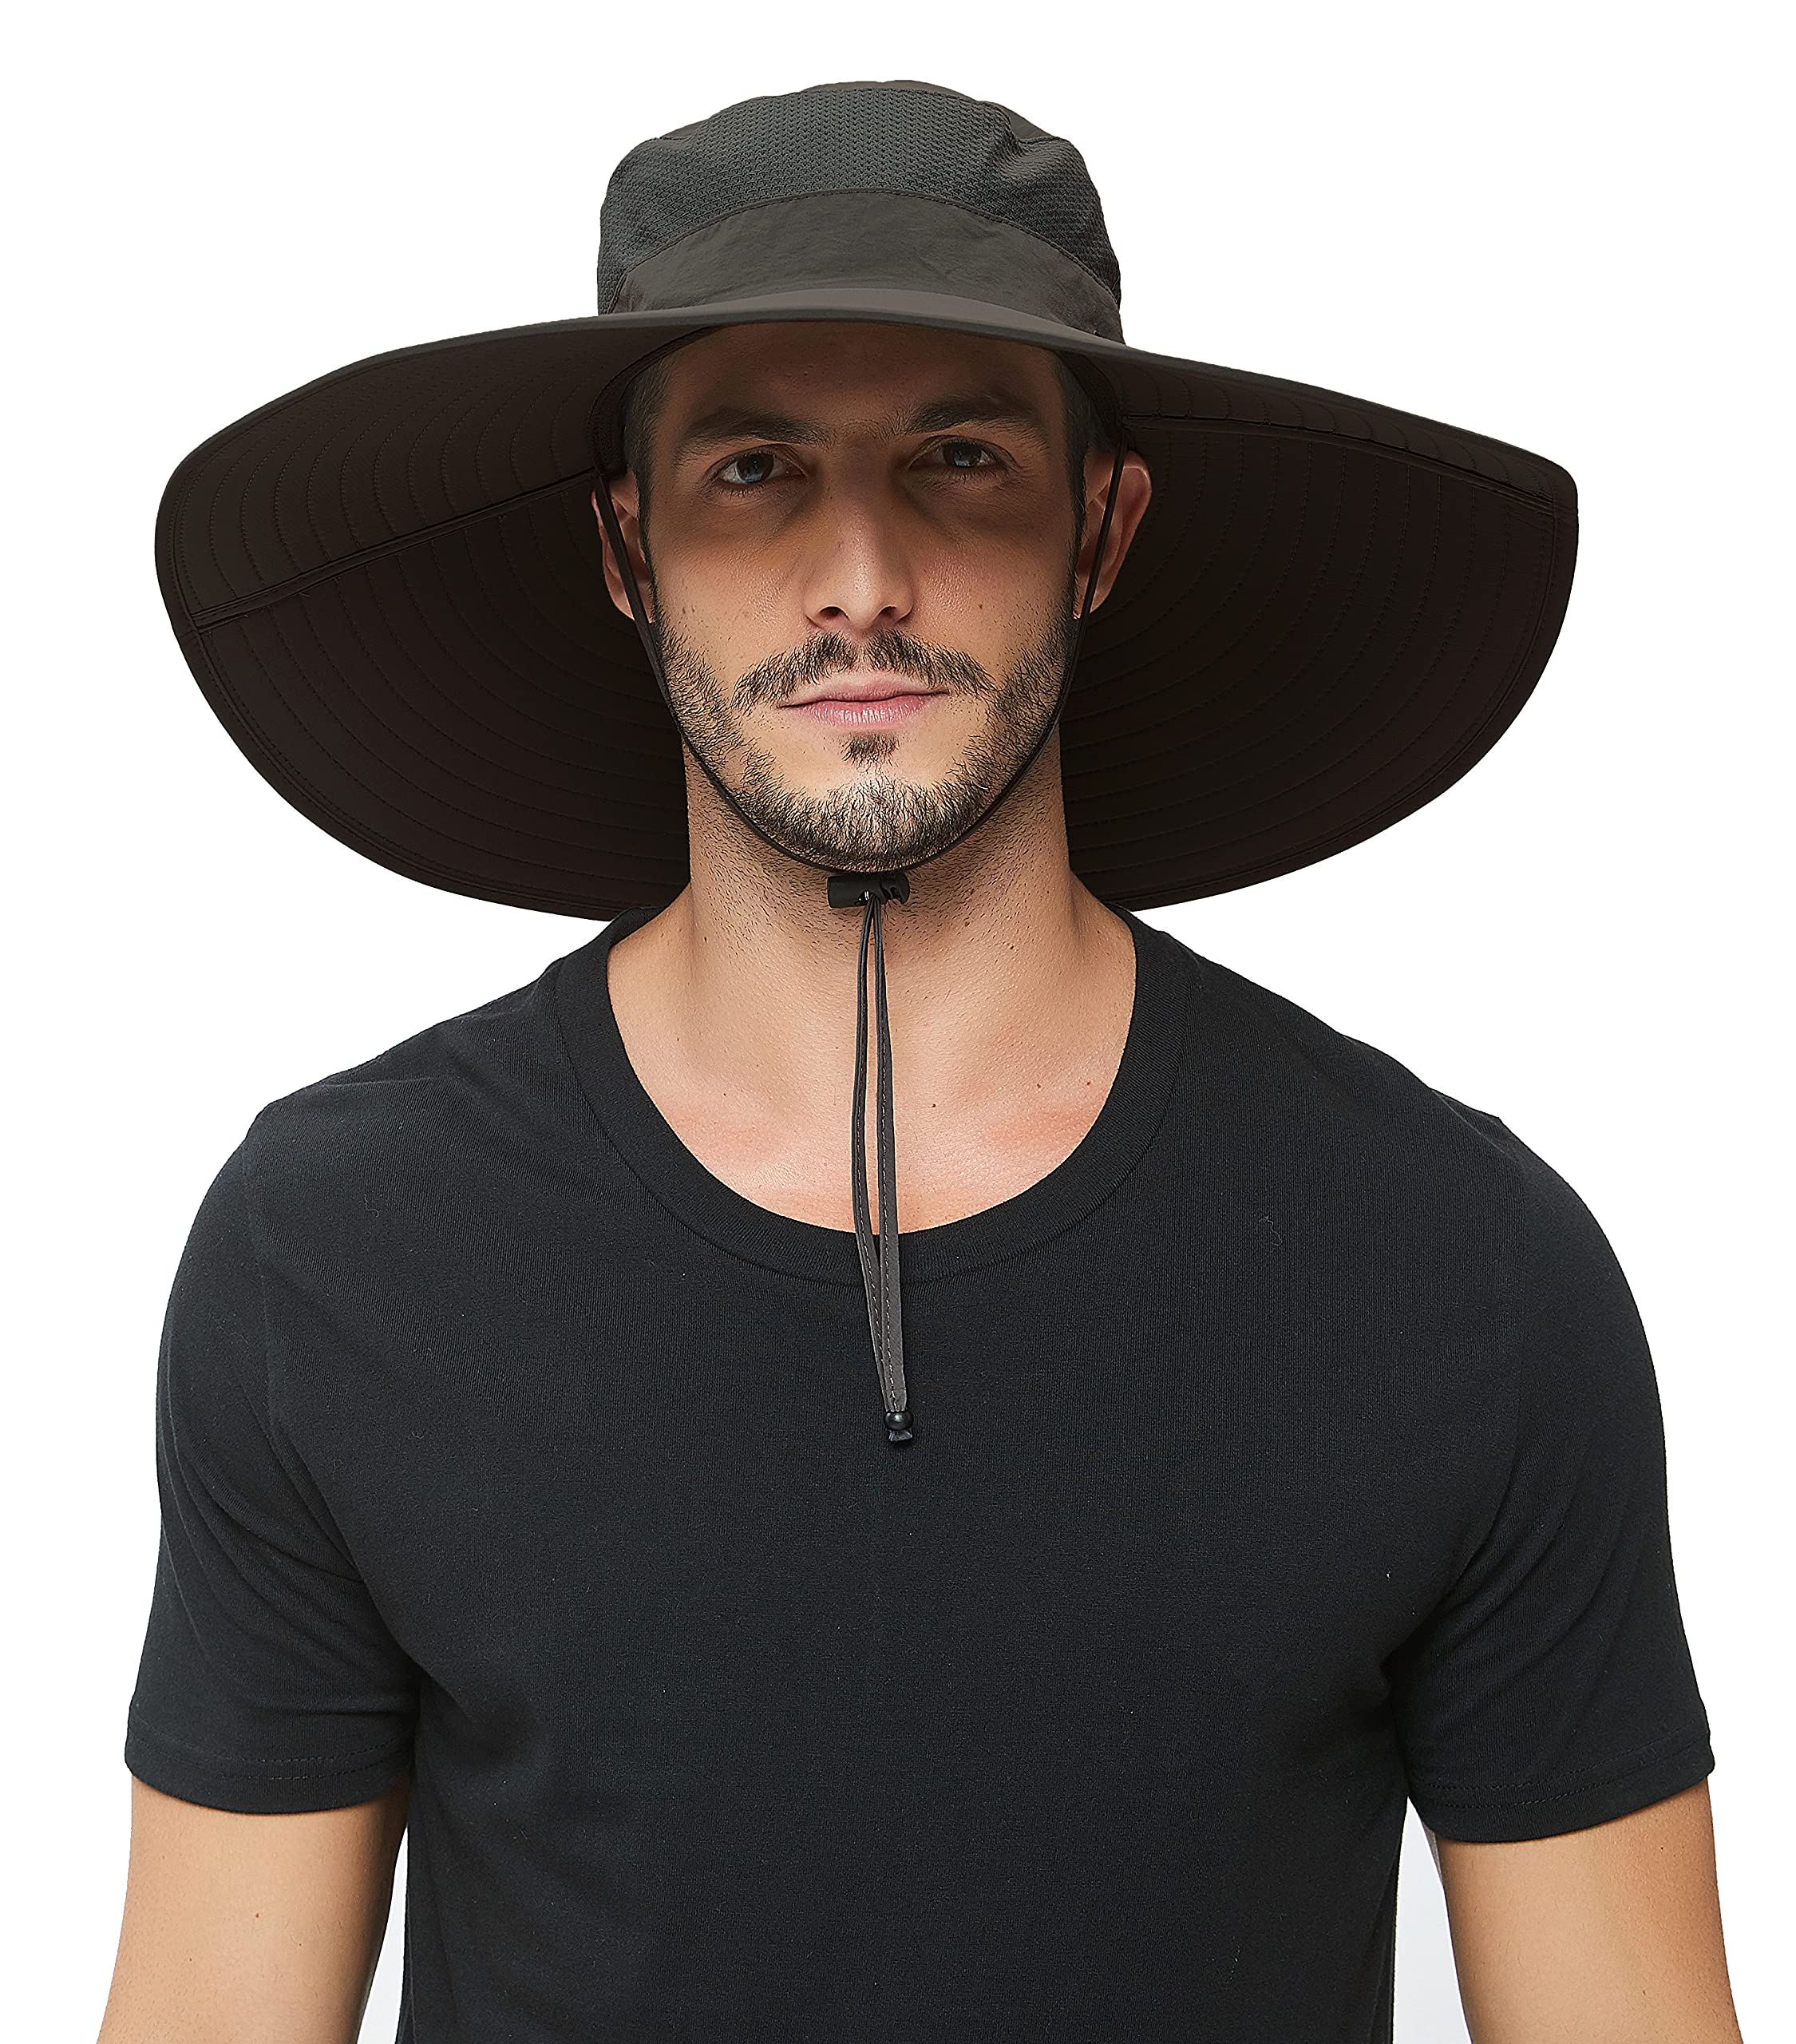 HLLMAN Super Wide Brim Sun Hat-UPF 50+ Protection,Waterproof Bucket Hat For Fishing, Hiking, Camping,Breathable Nylon & Mesh Dark Grey